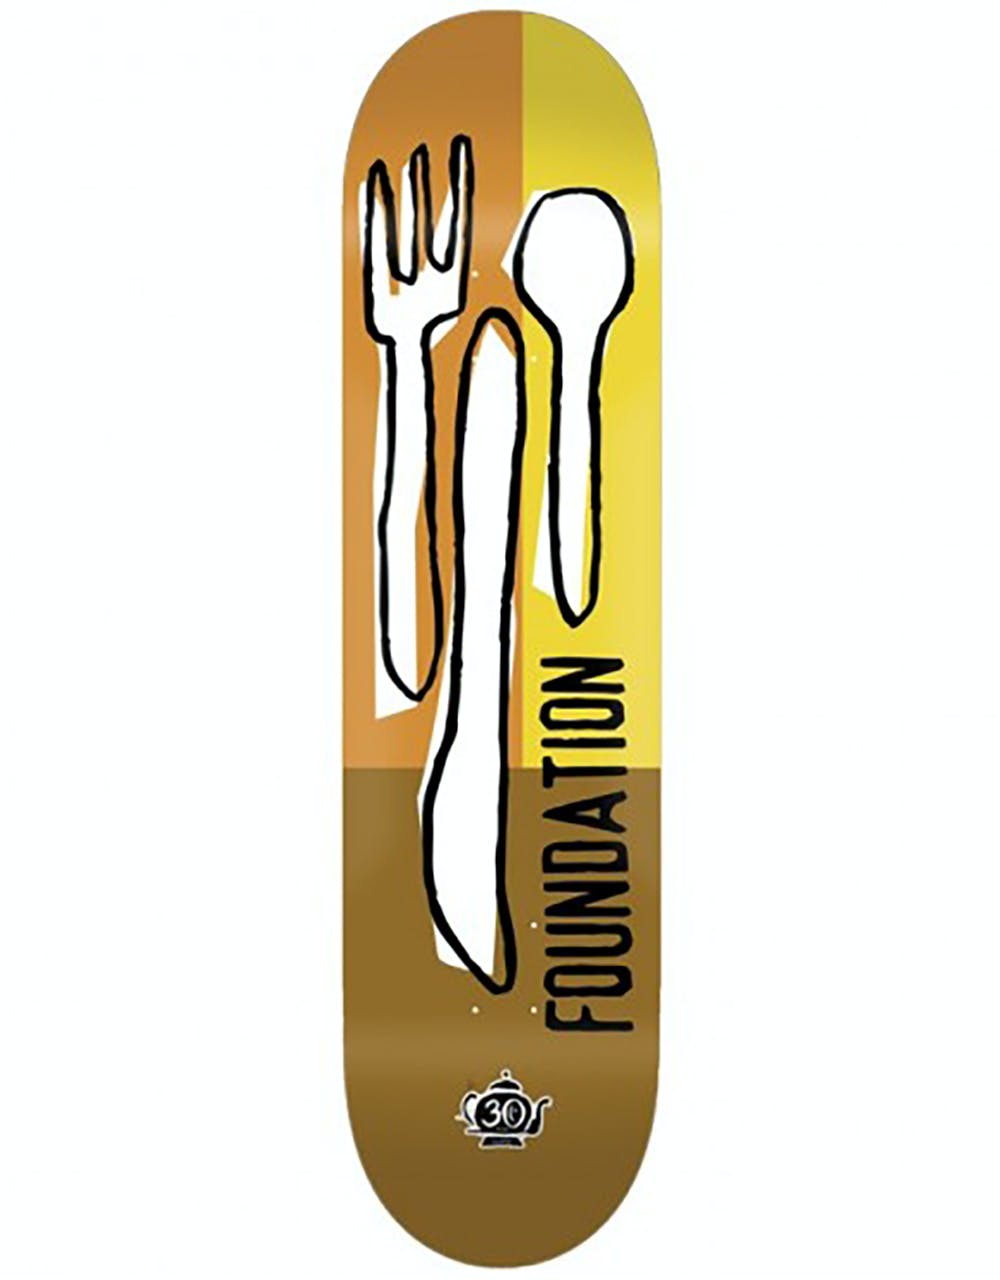 Foundation Forks 30 Year Reissue Skateboard Deck - 8.5"